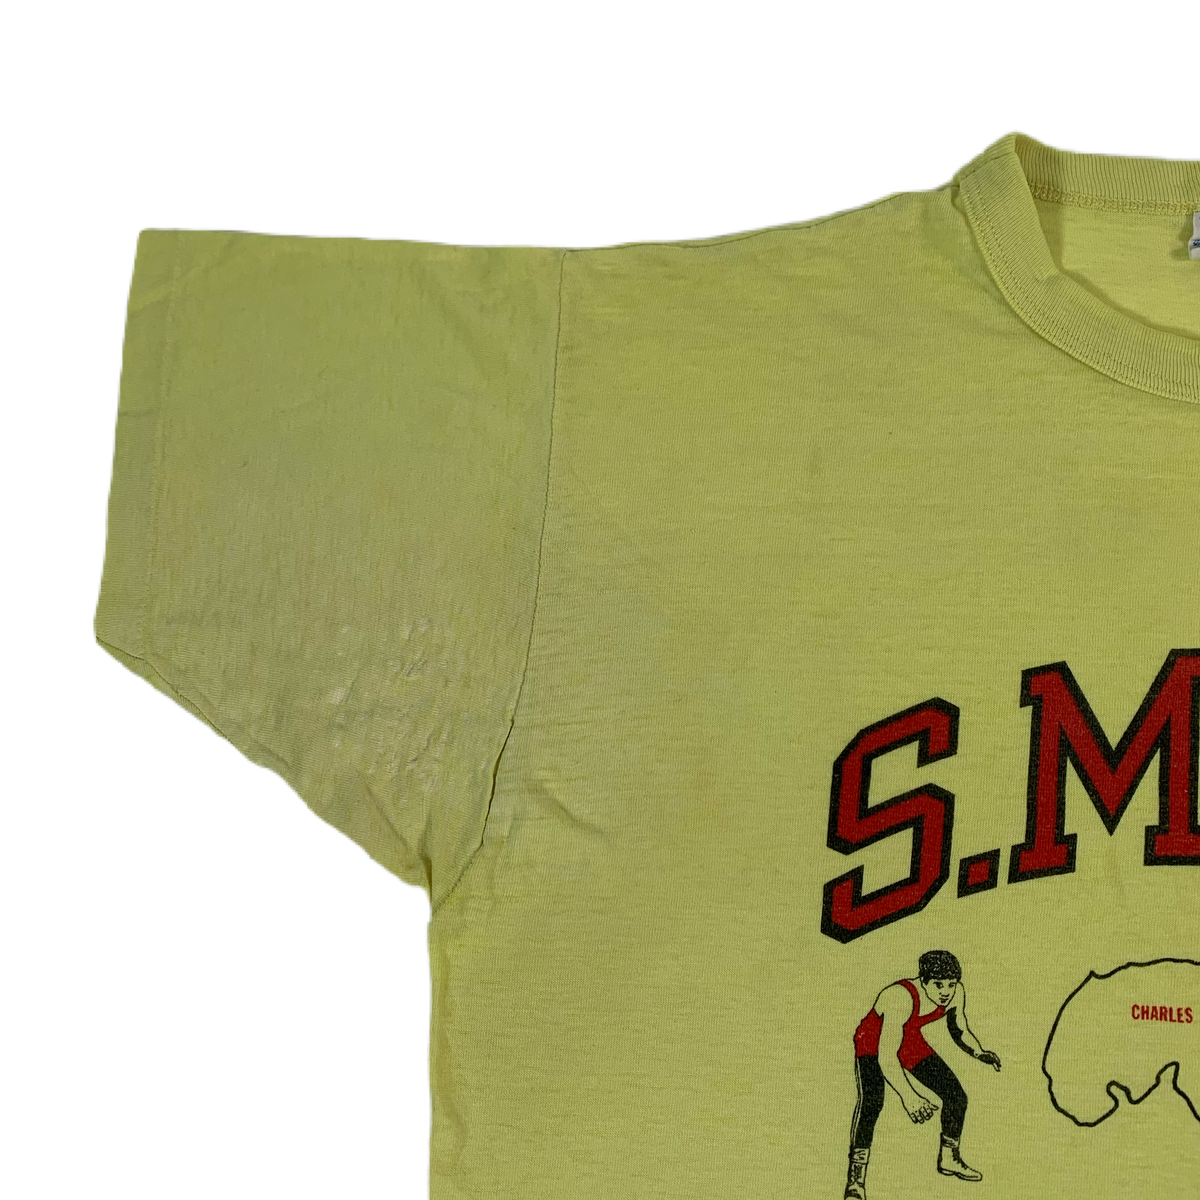 Vintage Champion SMAC “Wrestling Tournament” T-Shirt - jointcustodydc